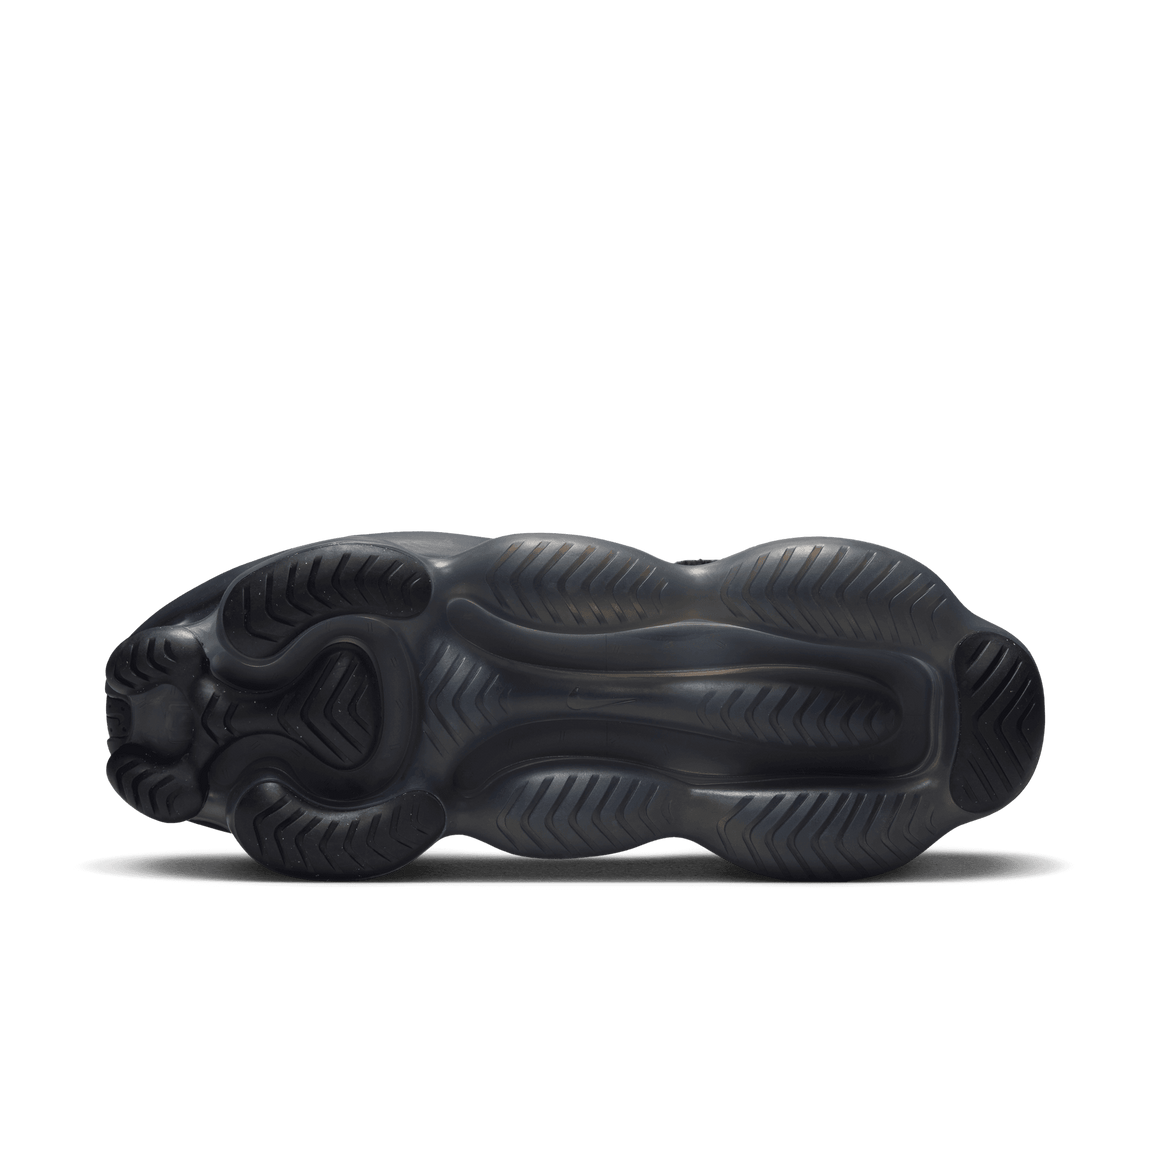 Nike Air Max Scorpion Flyknit (Black/Anthracite-Black) - Nike Air Max Scorpion Flyknit (Black/Anthracite-Black) - 